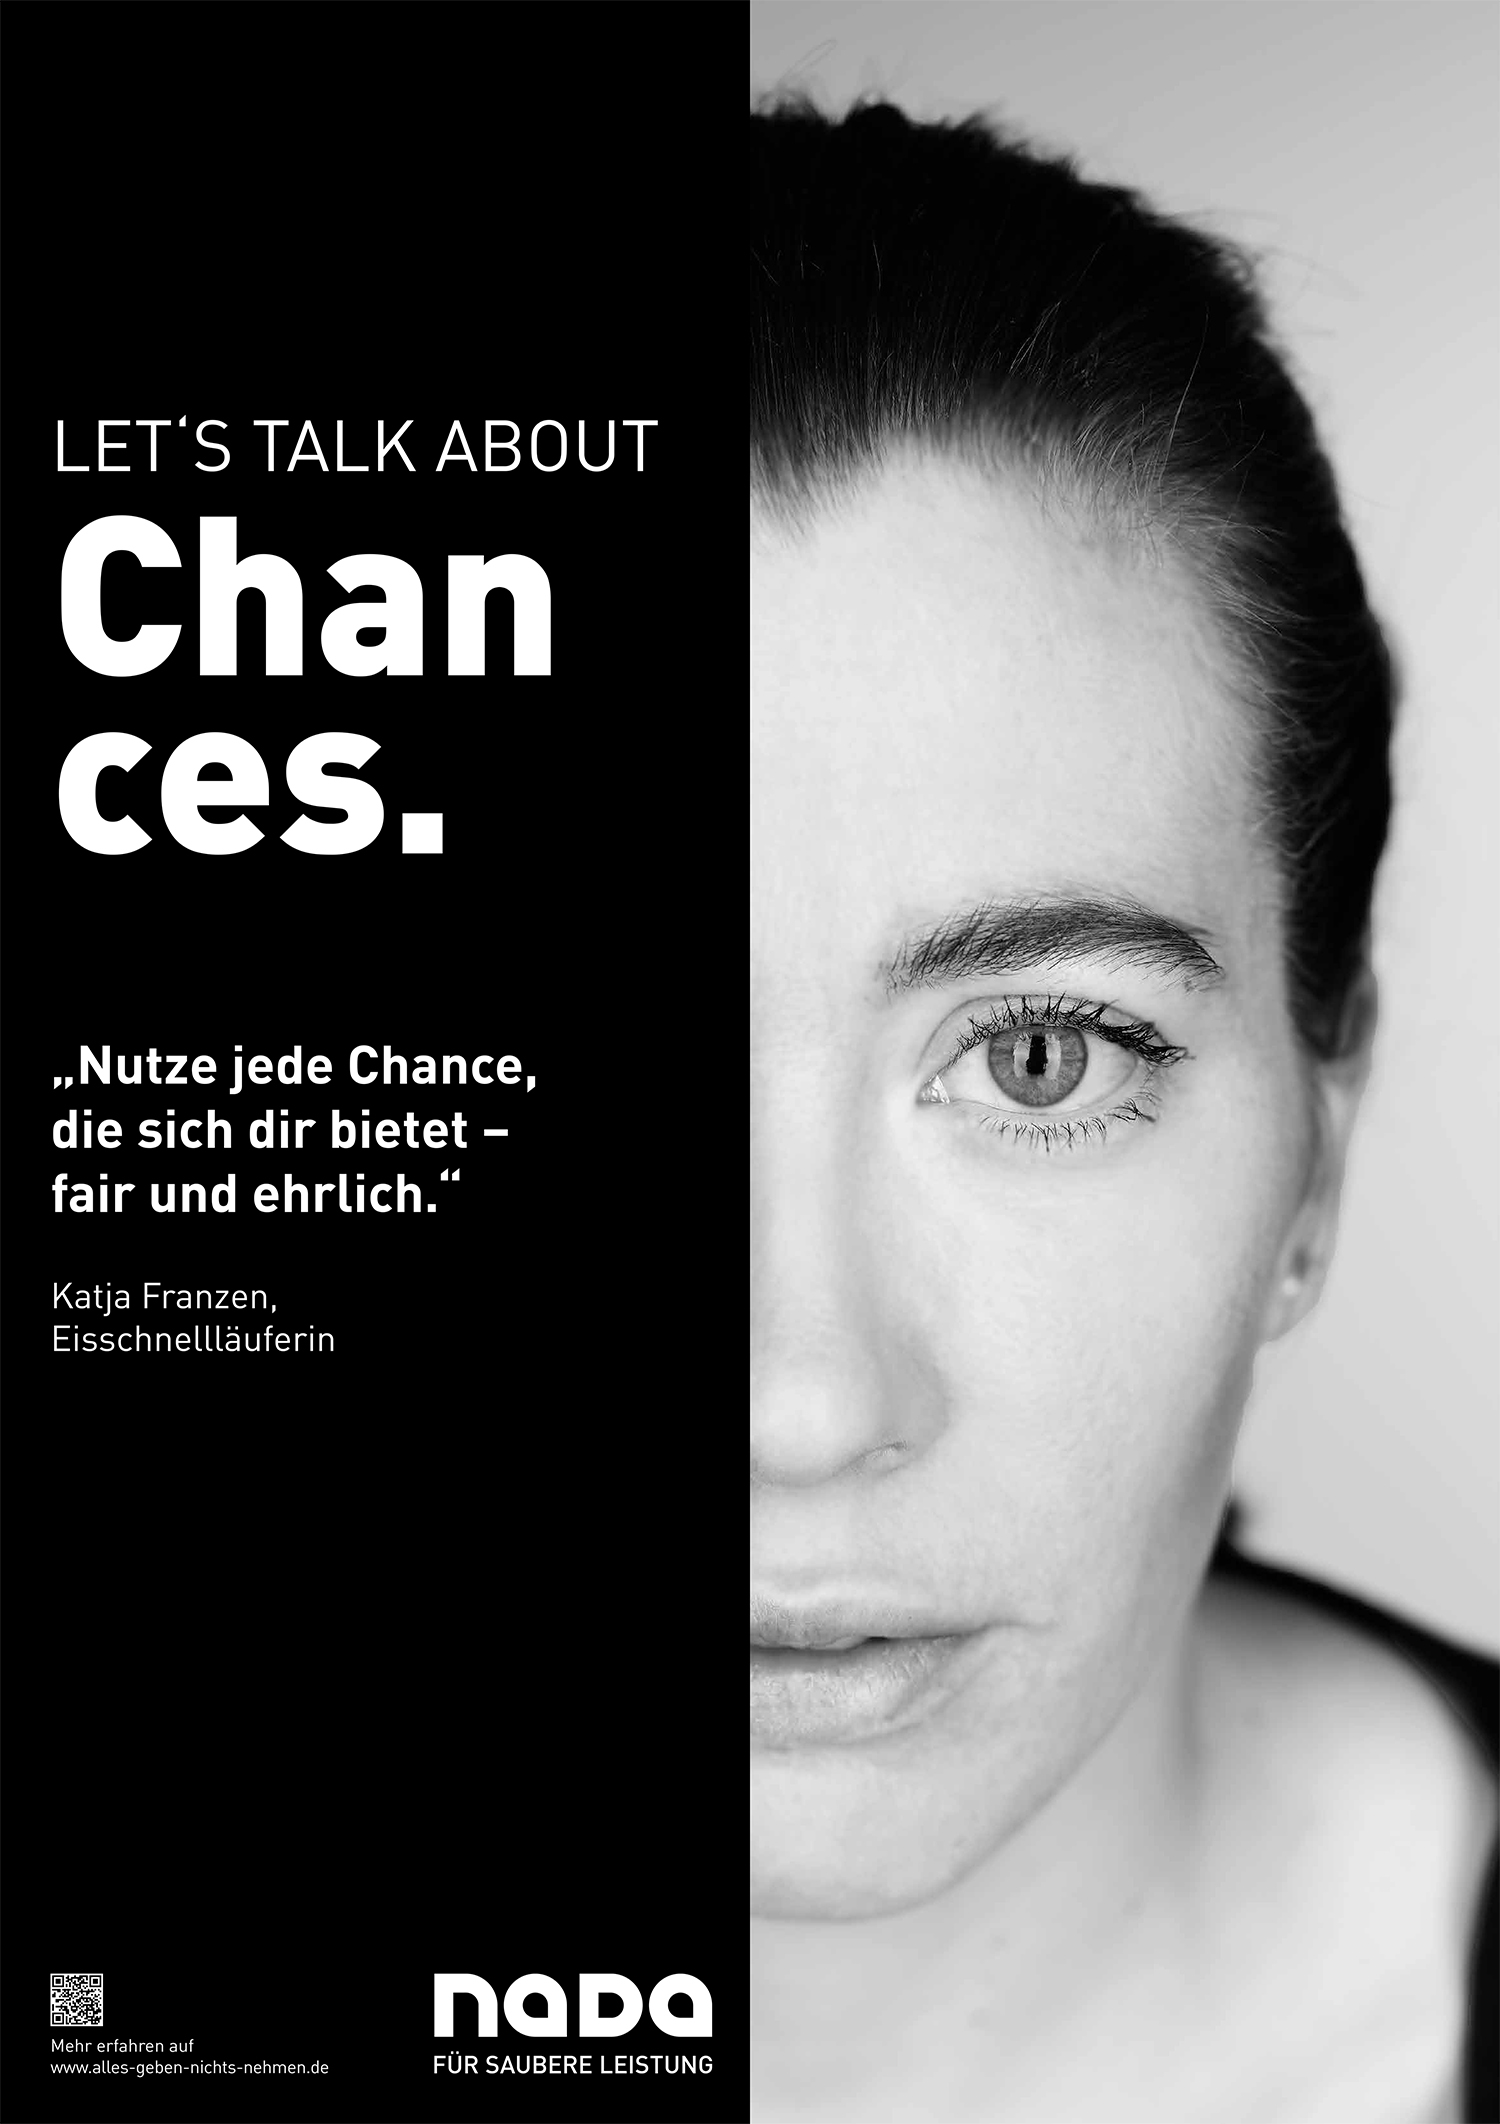 Campaign Poster with Katja Franzen